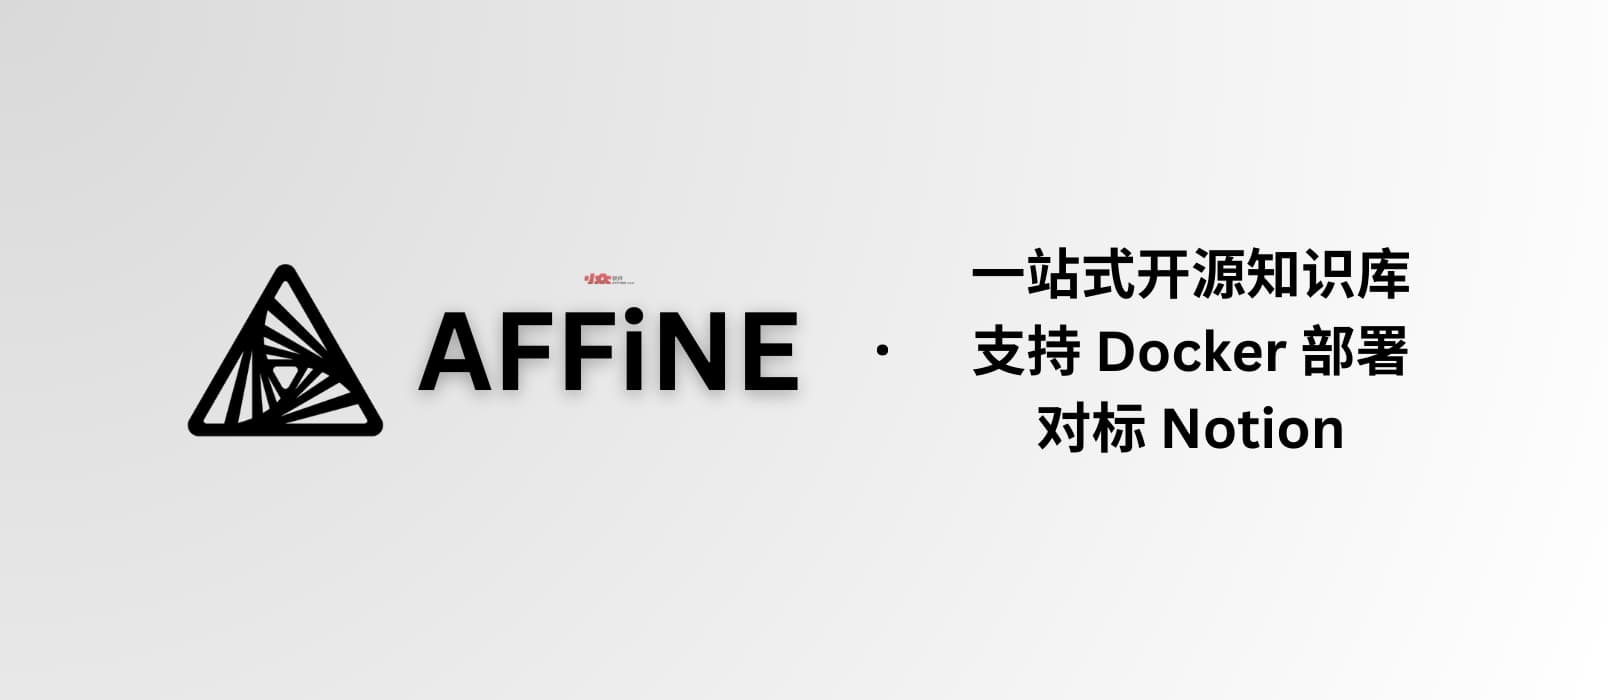 AFFiNE - 支持 Docker 部署的开源知识库工具｜宣称对标 Notion，一站式知识库、笔记解决方案 1